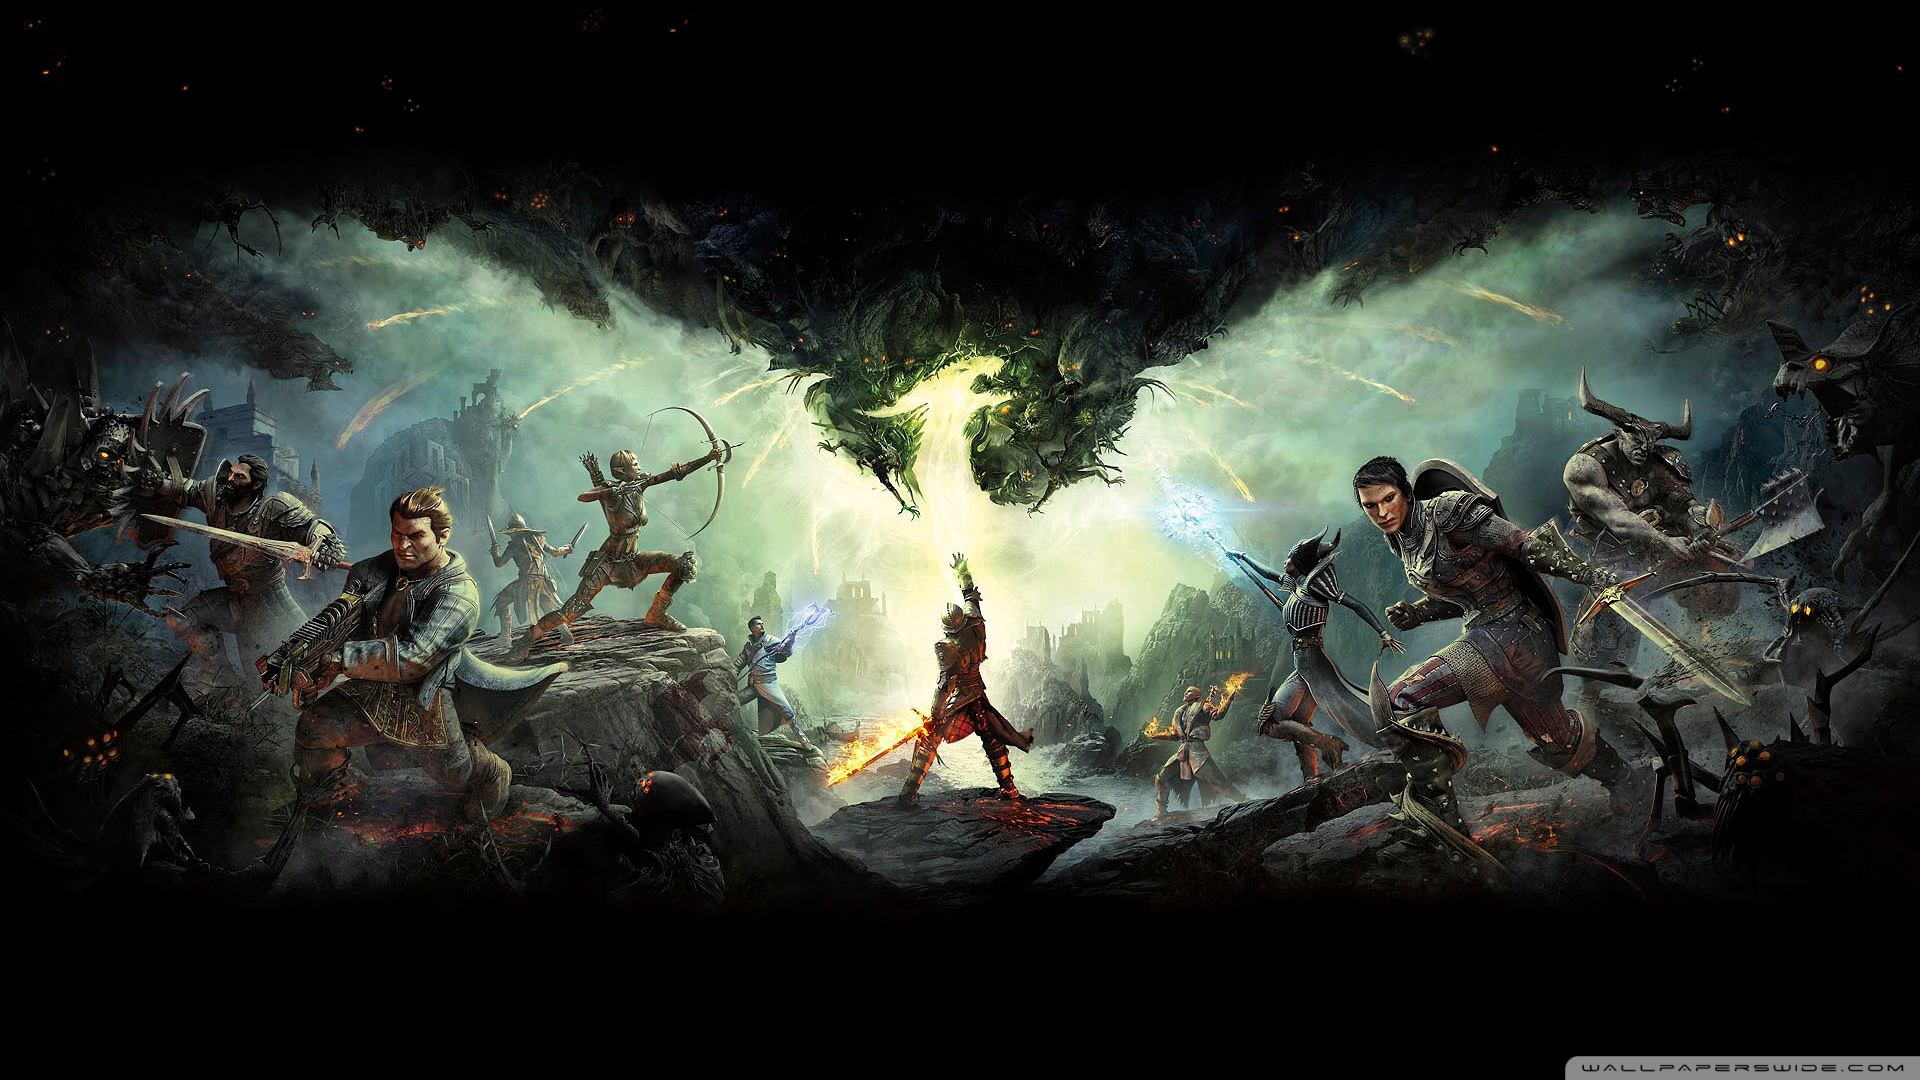 Dragon Age Inquisition 4k HD Desktop Wallpaper For Ultra